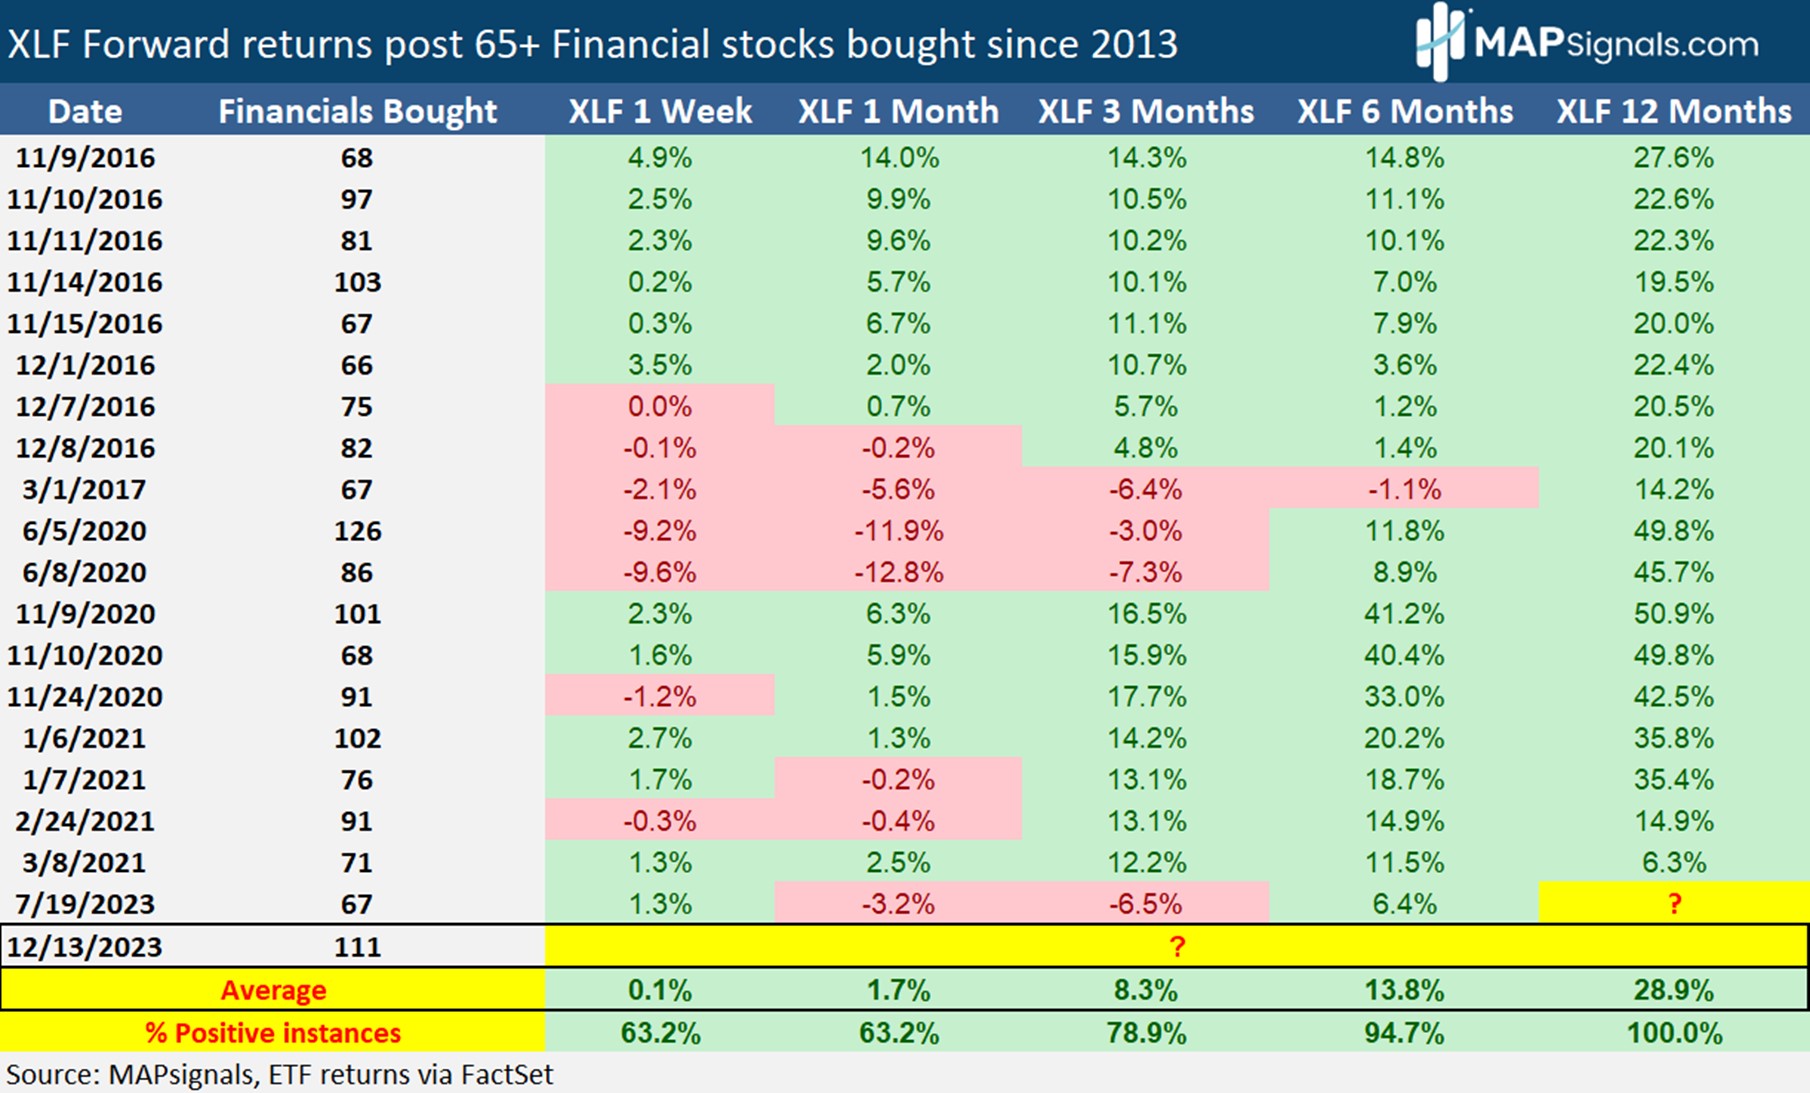 XLF Forward returns post 65+Financial stocks bought since 2013 | MAPsignals